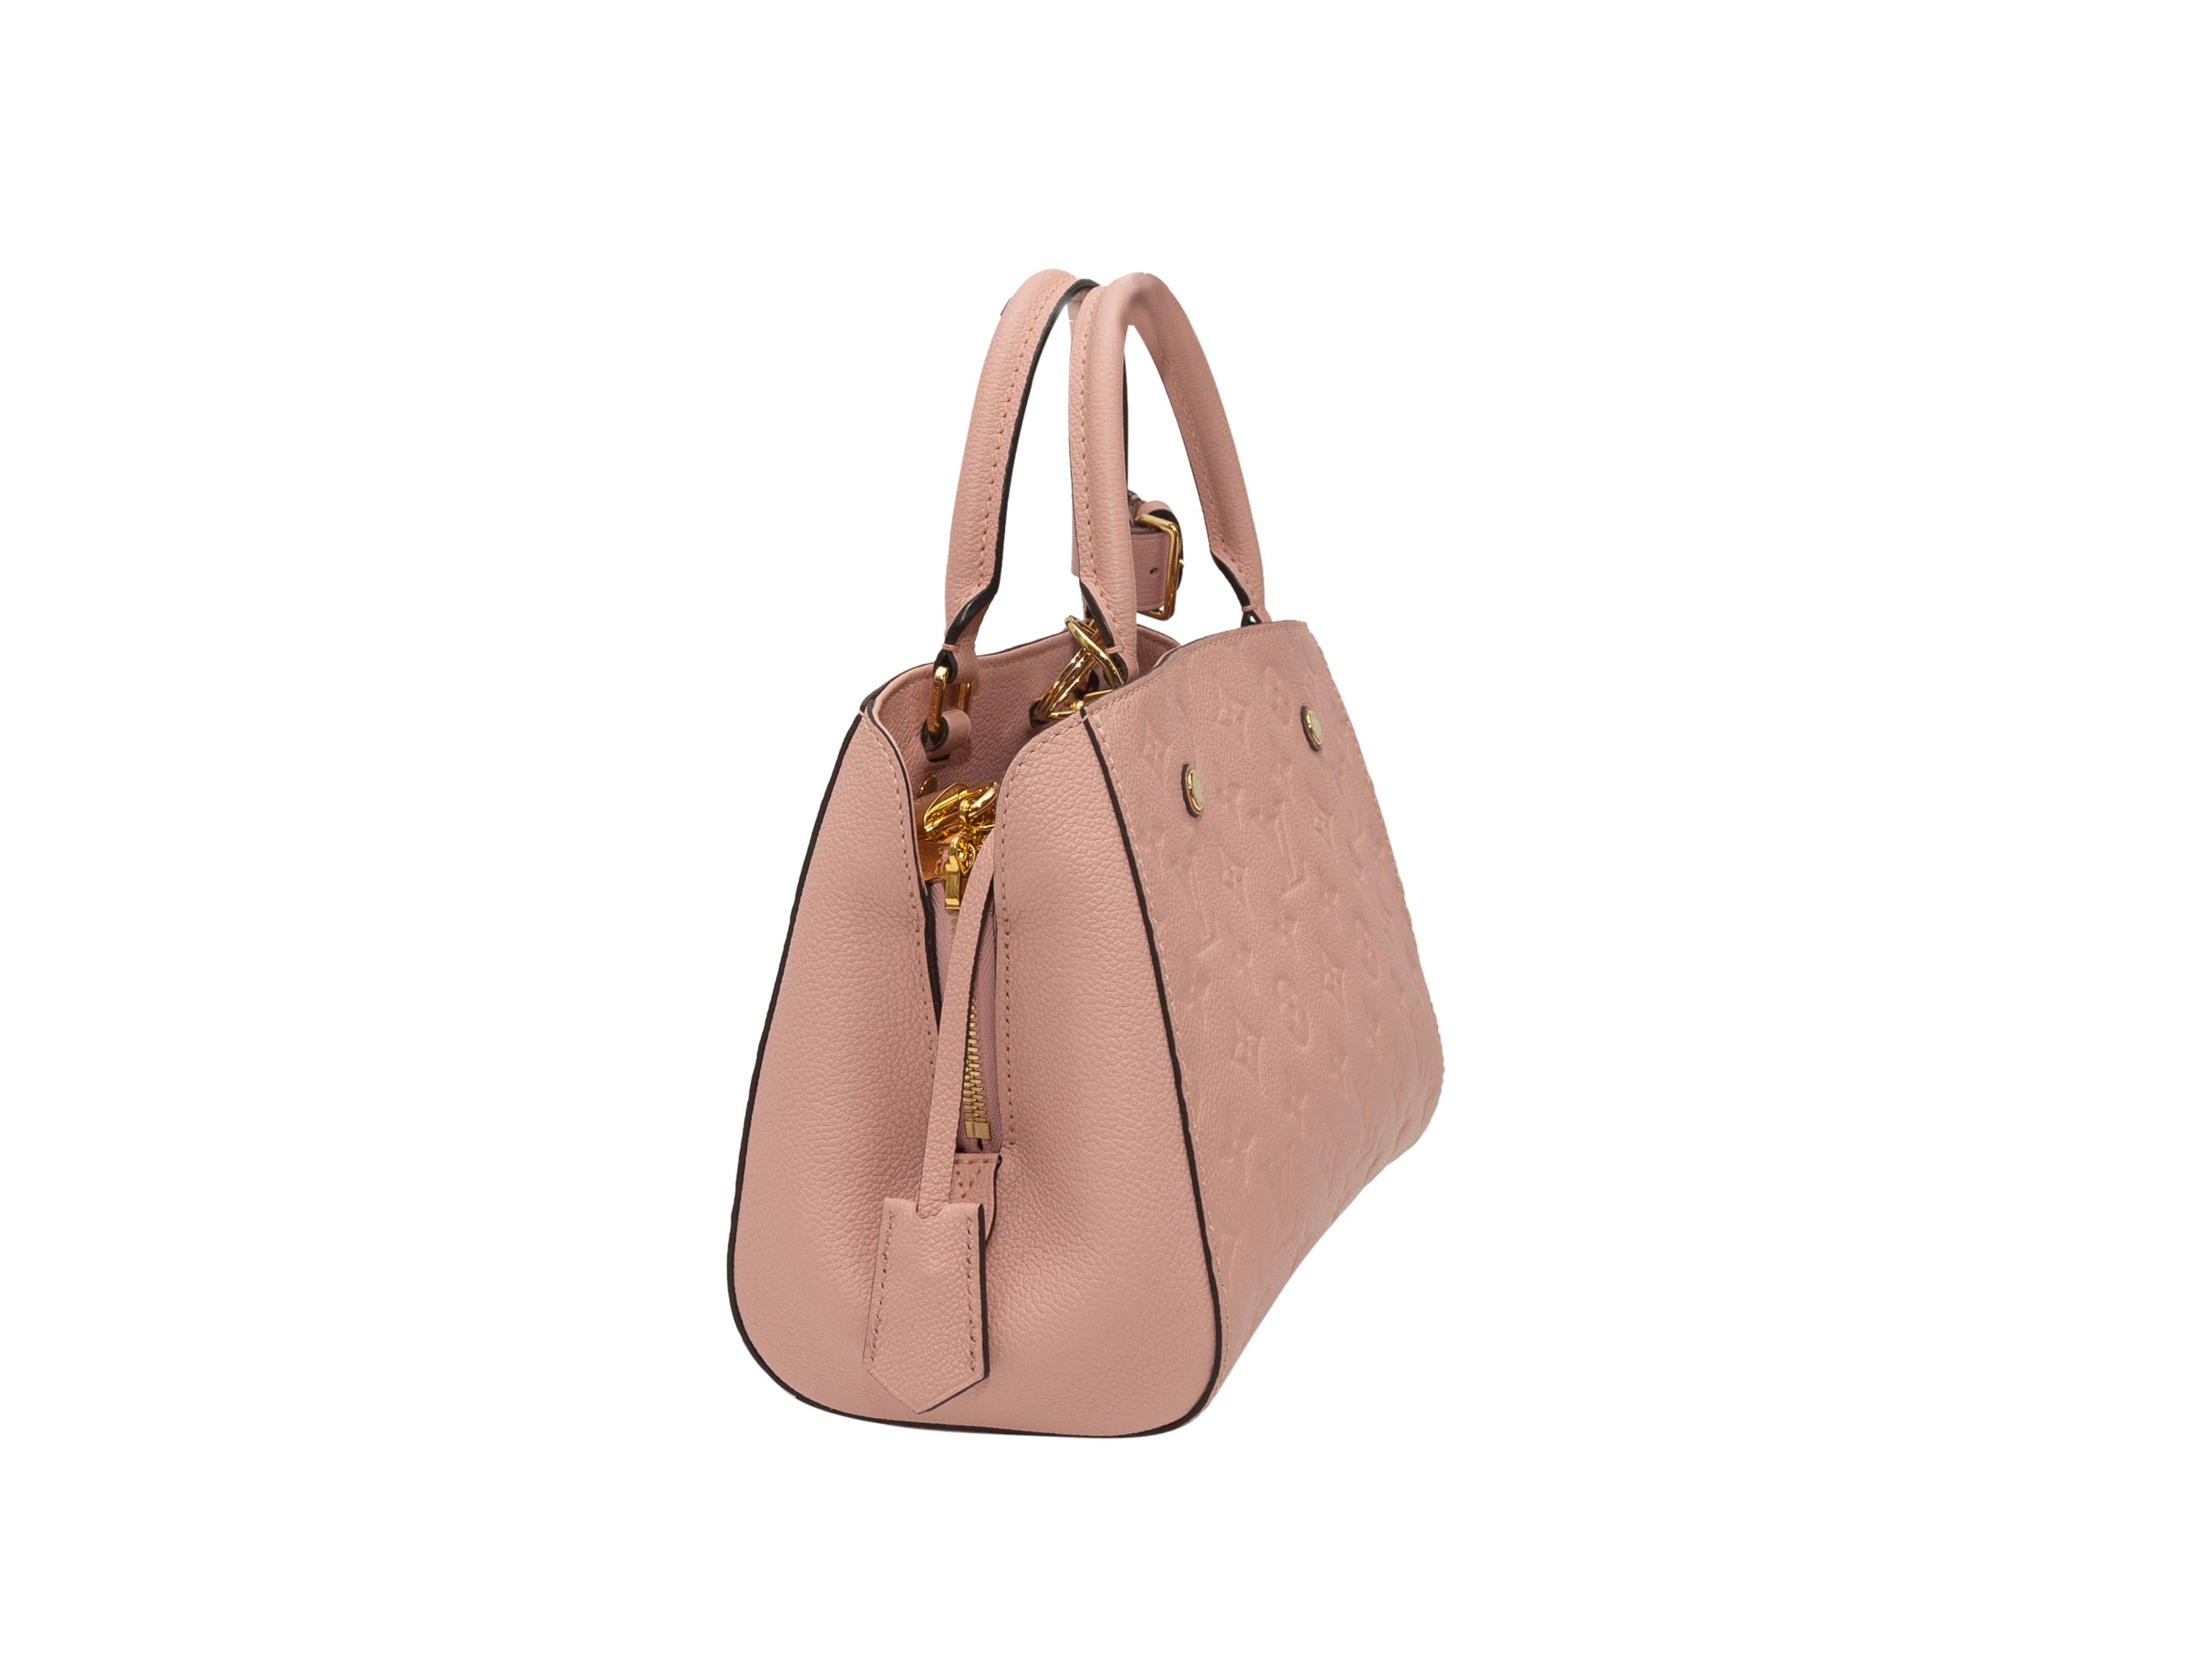 Product details: Light pink monogram leather Empreinte Montaigne PM bag by Louis Vuitton. Gold-tone hardware. Dual rolled top handles. Optional shoulder strap. Zip closure at top. 13.5